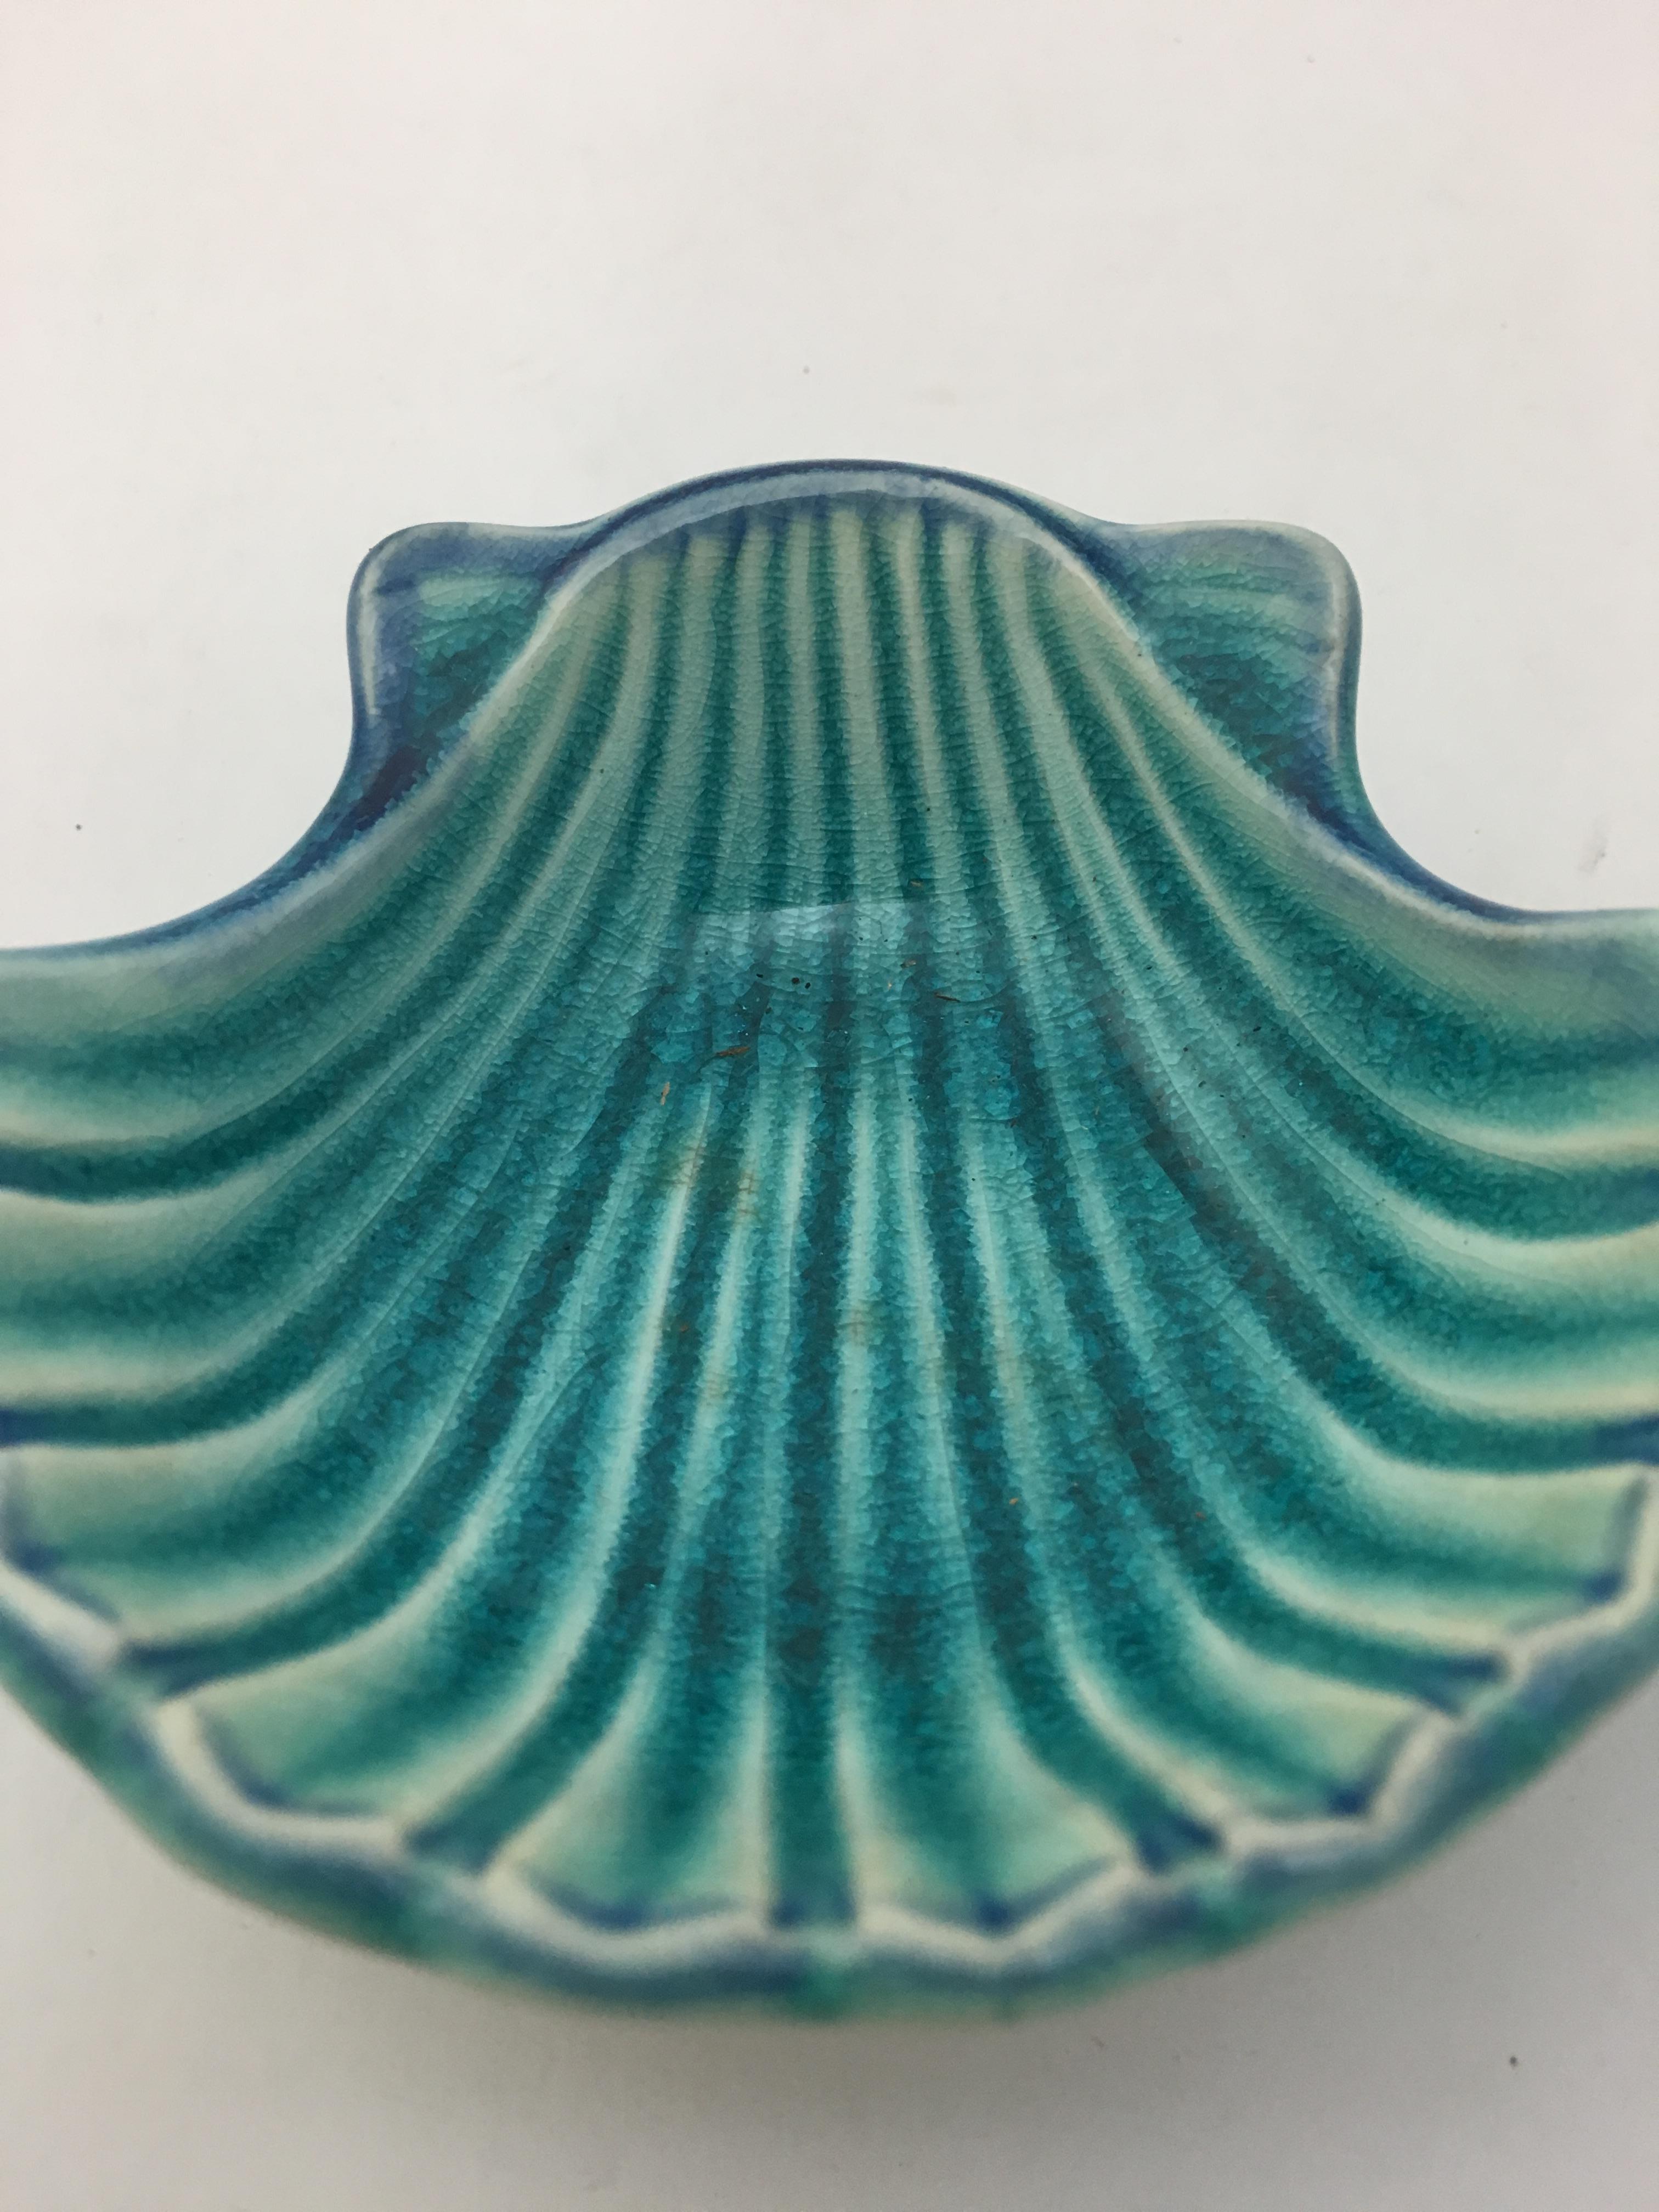 Ceramic 1960s Azure Blue Japanese Scallop Shell Bowls